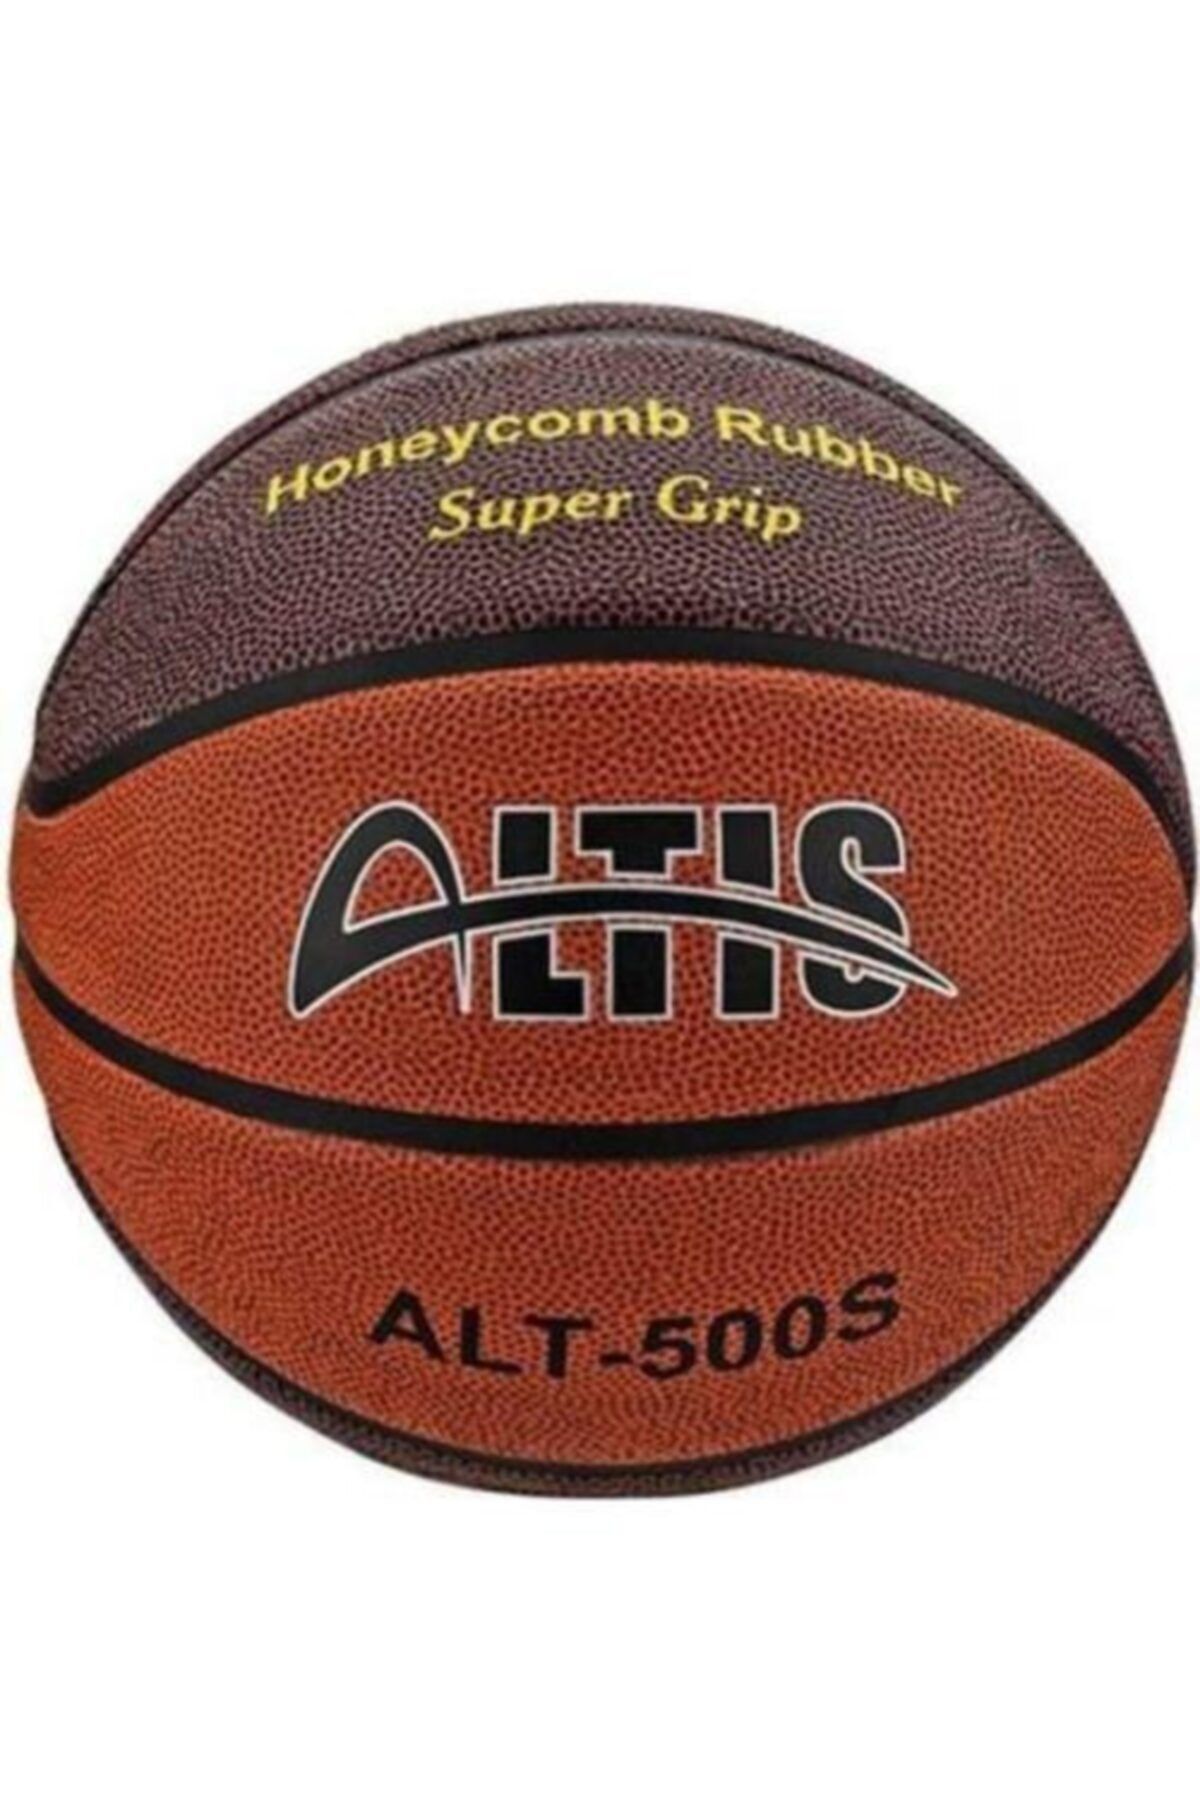 ALTIS Turuncu Alt-500s Basketbol Topu 5 Numara